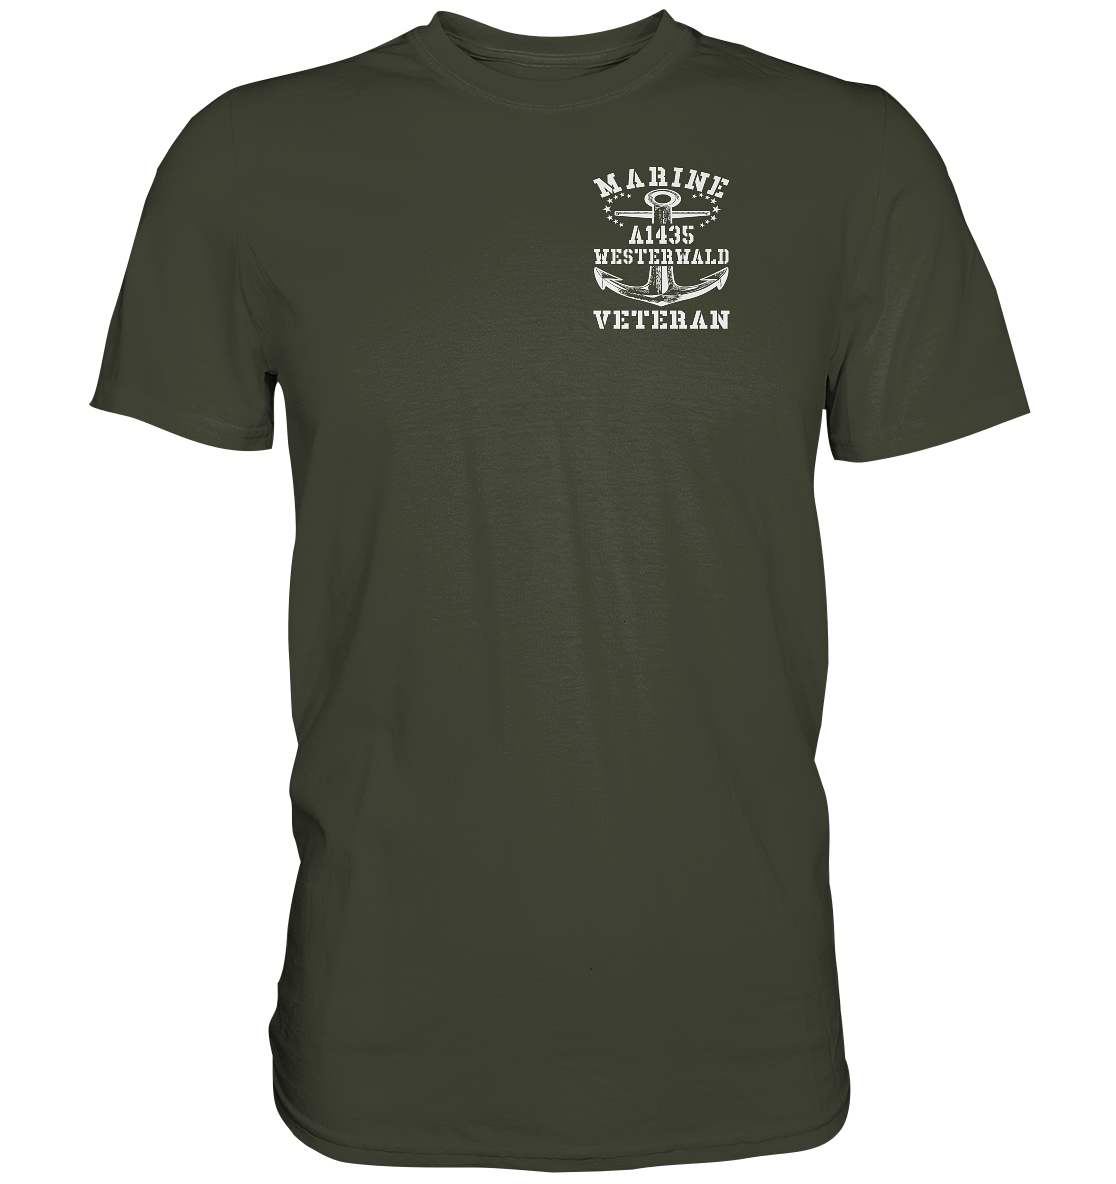 Marine Veteran A1435 WESTERWALD - Premium Shirt